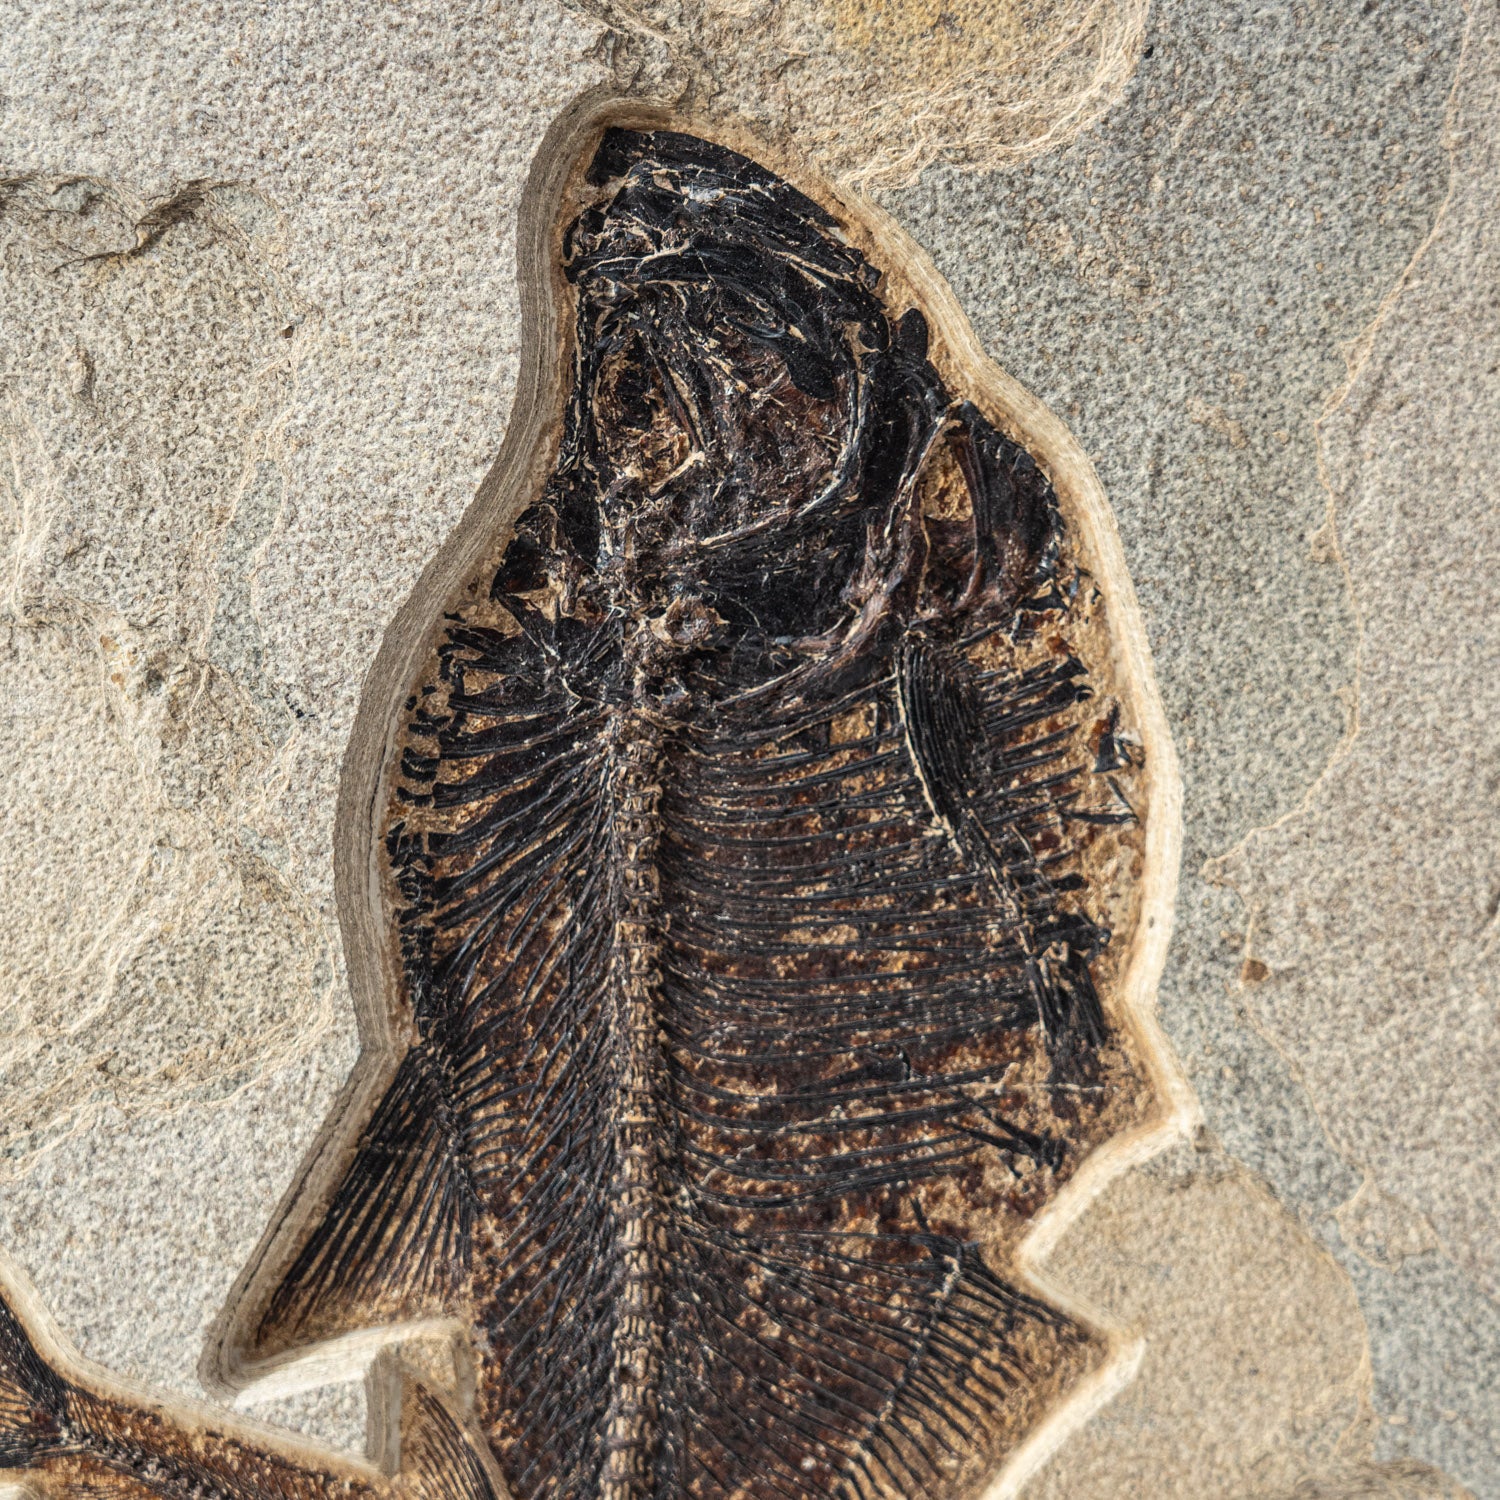 Giant Diplomytus Fish Fossil Plate (60.2 lbs)